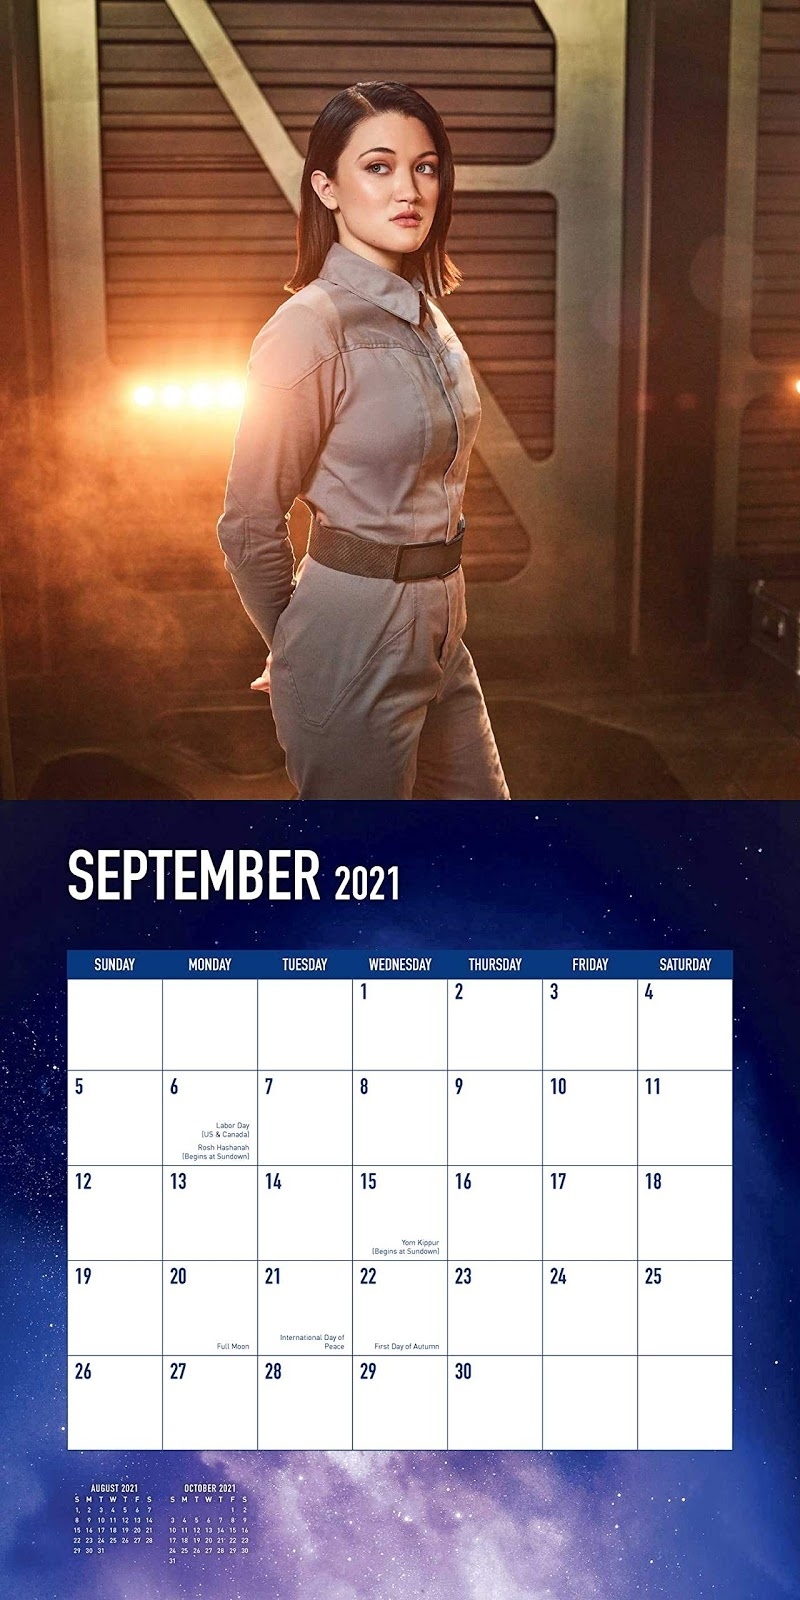 The Trek Collective: 2021 Star Trek Calendar Previews Empire And Puzzles September 2021 Calendar